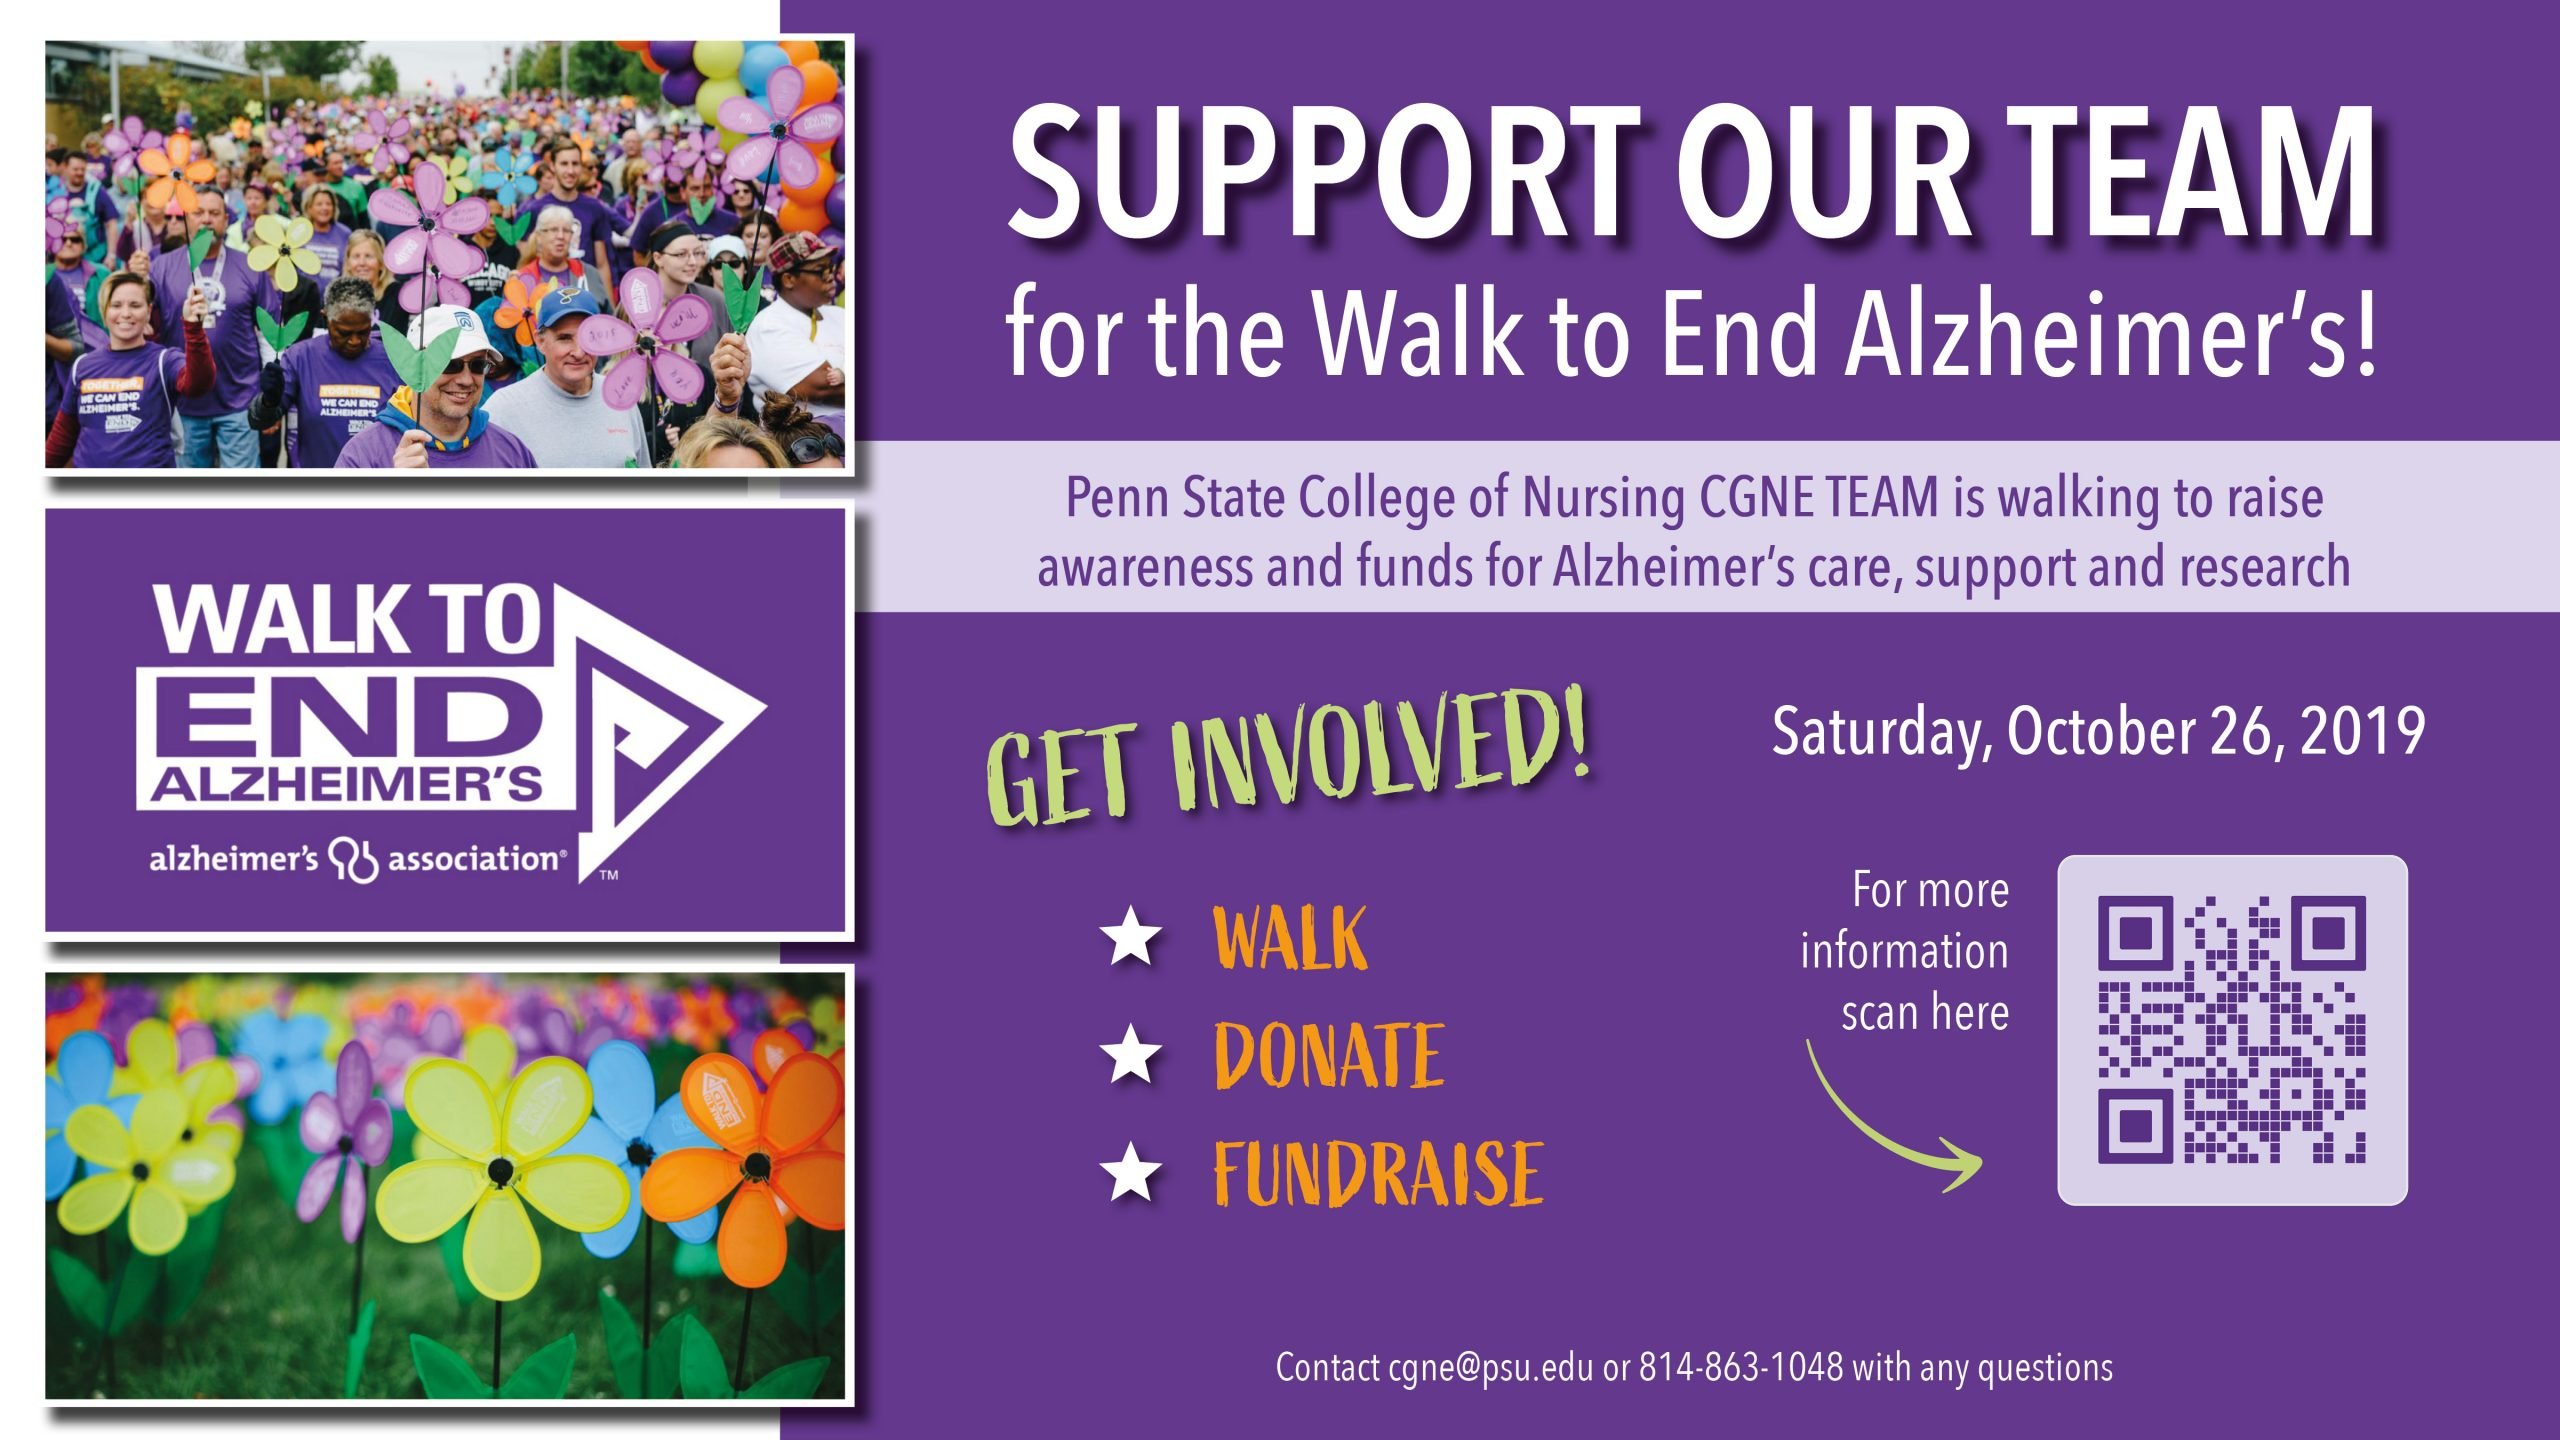 Walk to End AlzheimersPenn State College of Nursing